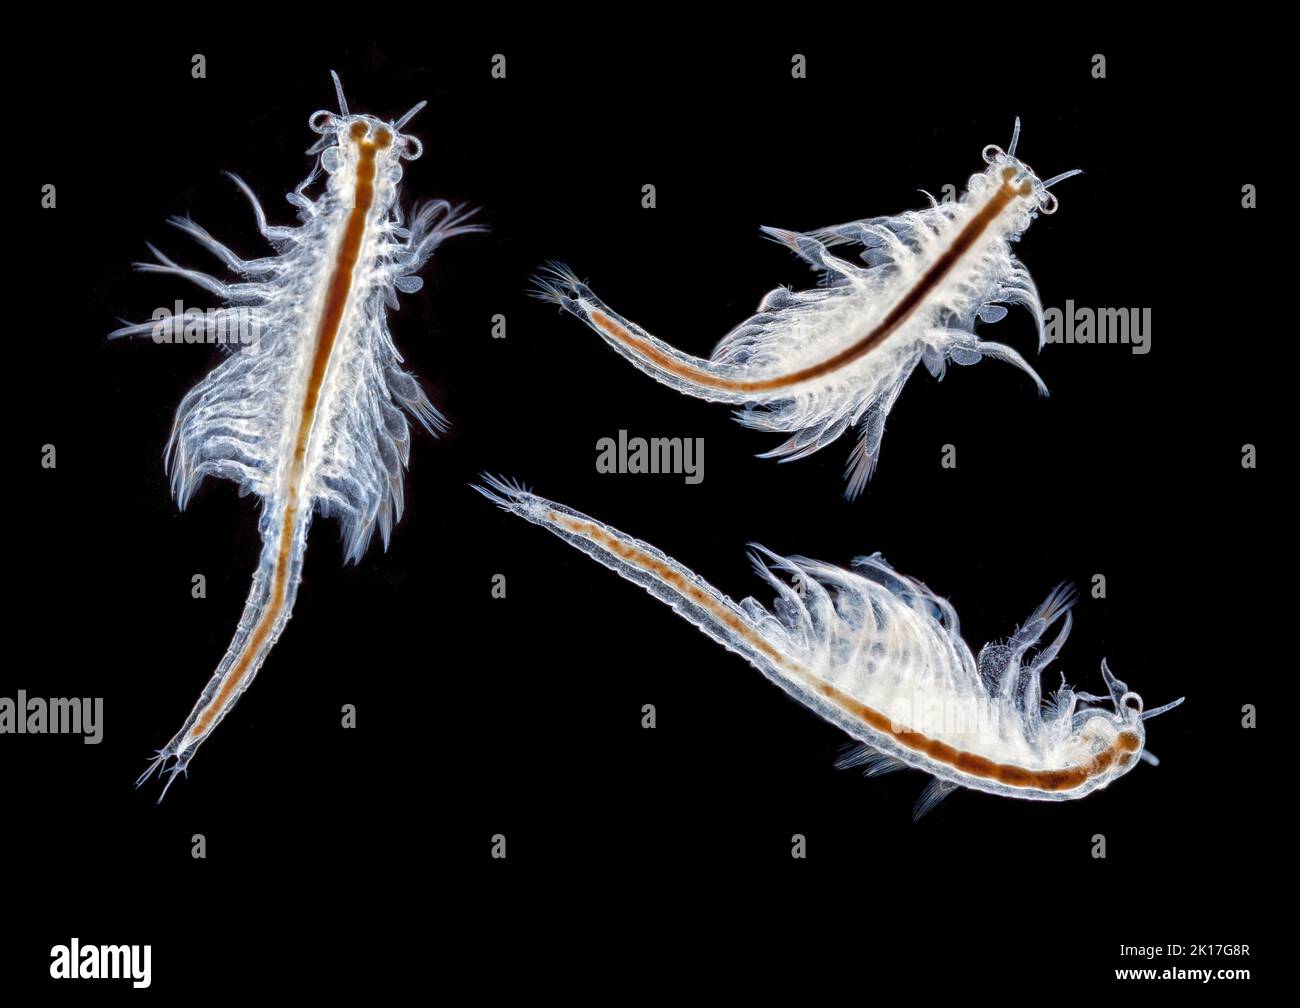 Artemia sp. Brine shrimp, darkfield photomicrograph Stock Photo